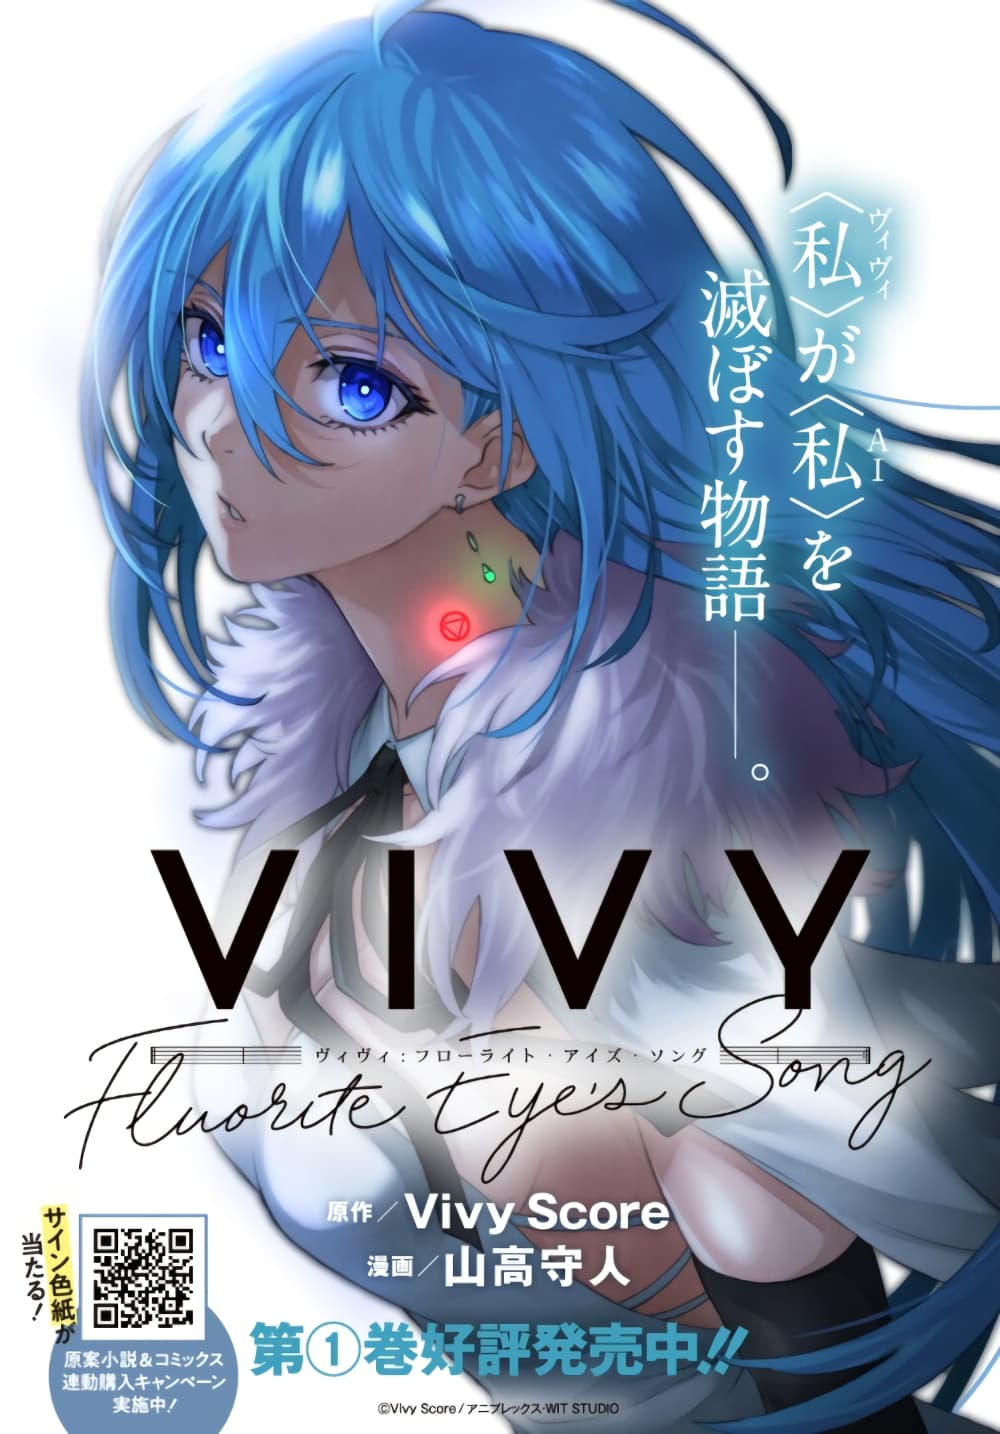 Vivy Fluorite Eye’s Song 6 (1)